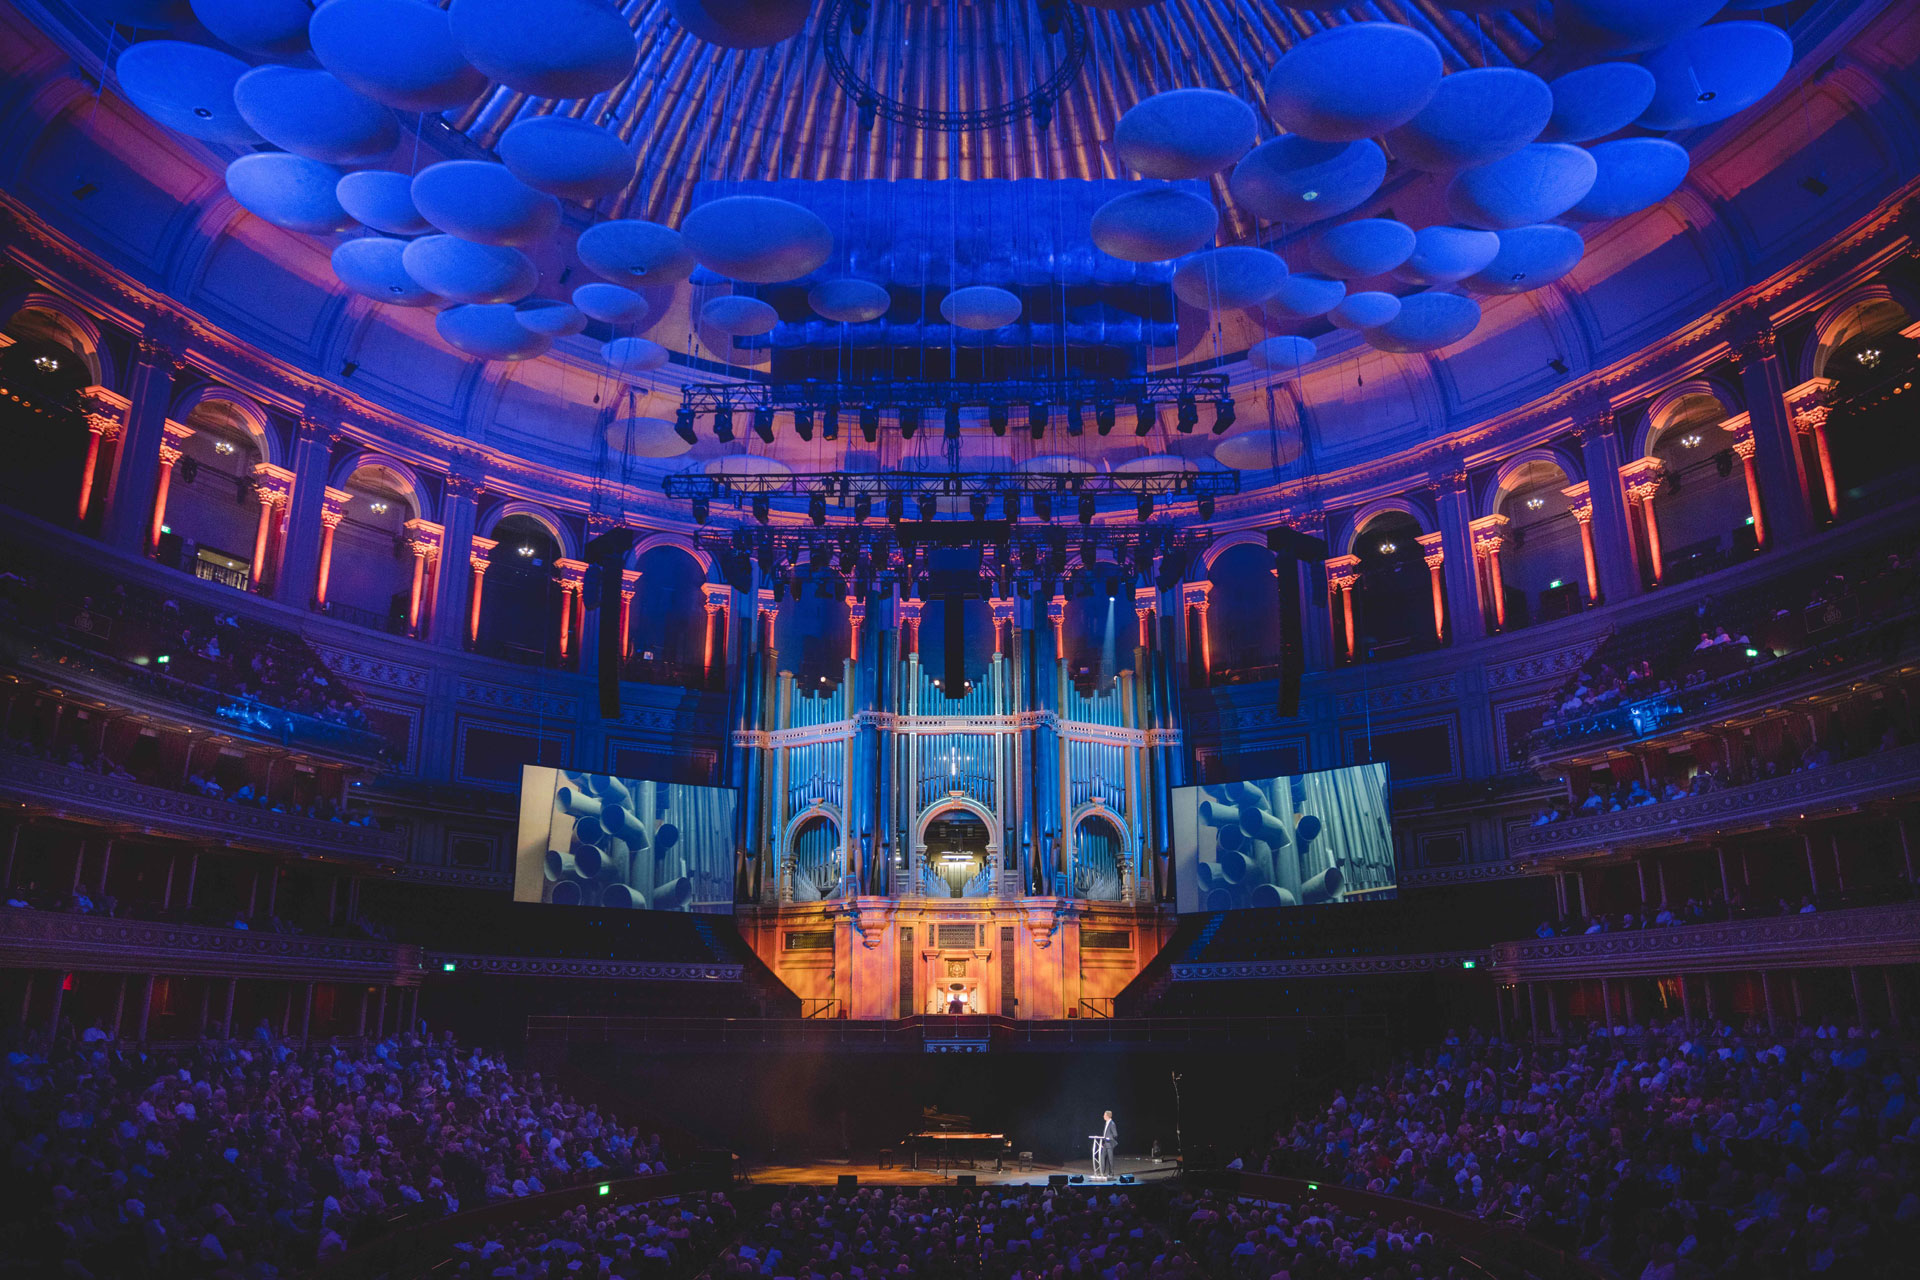 The Grand Organ Celebration